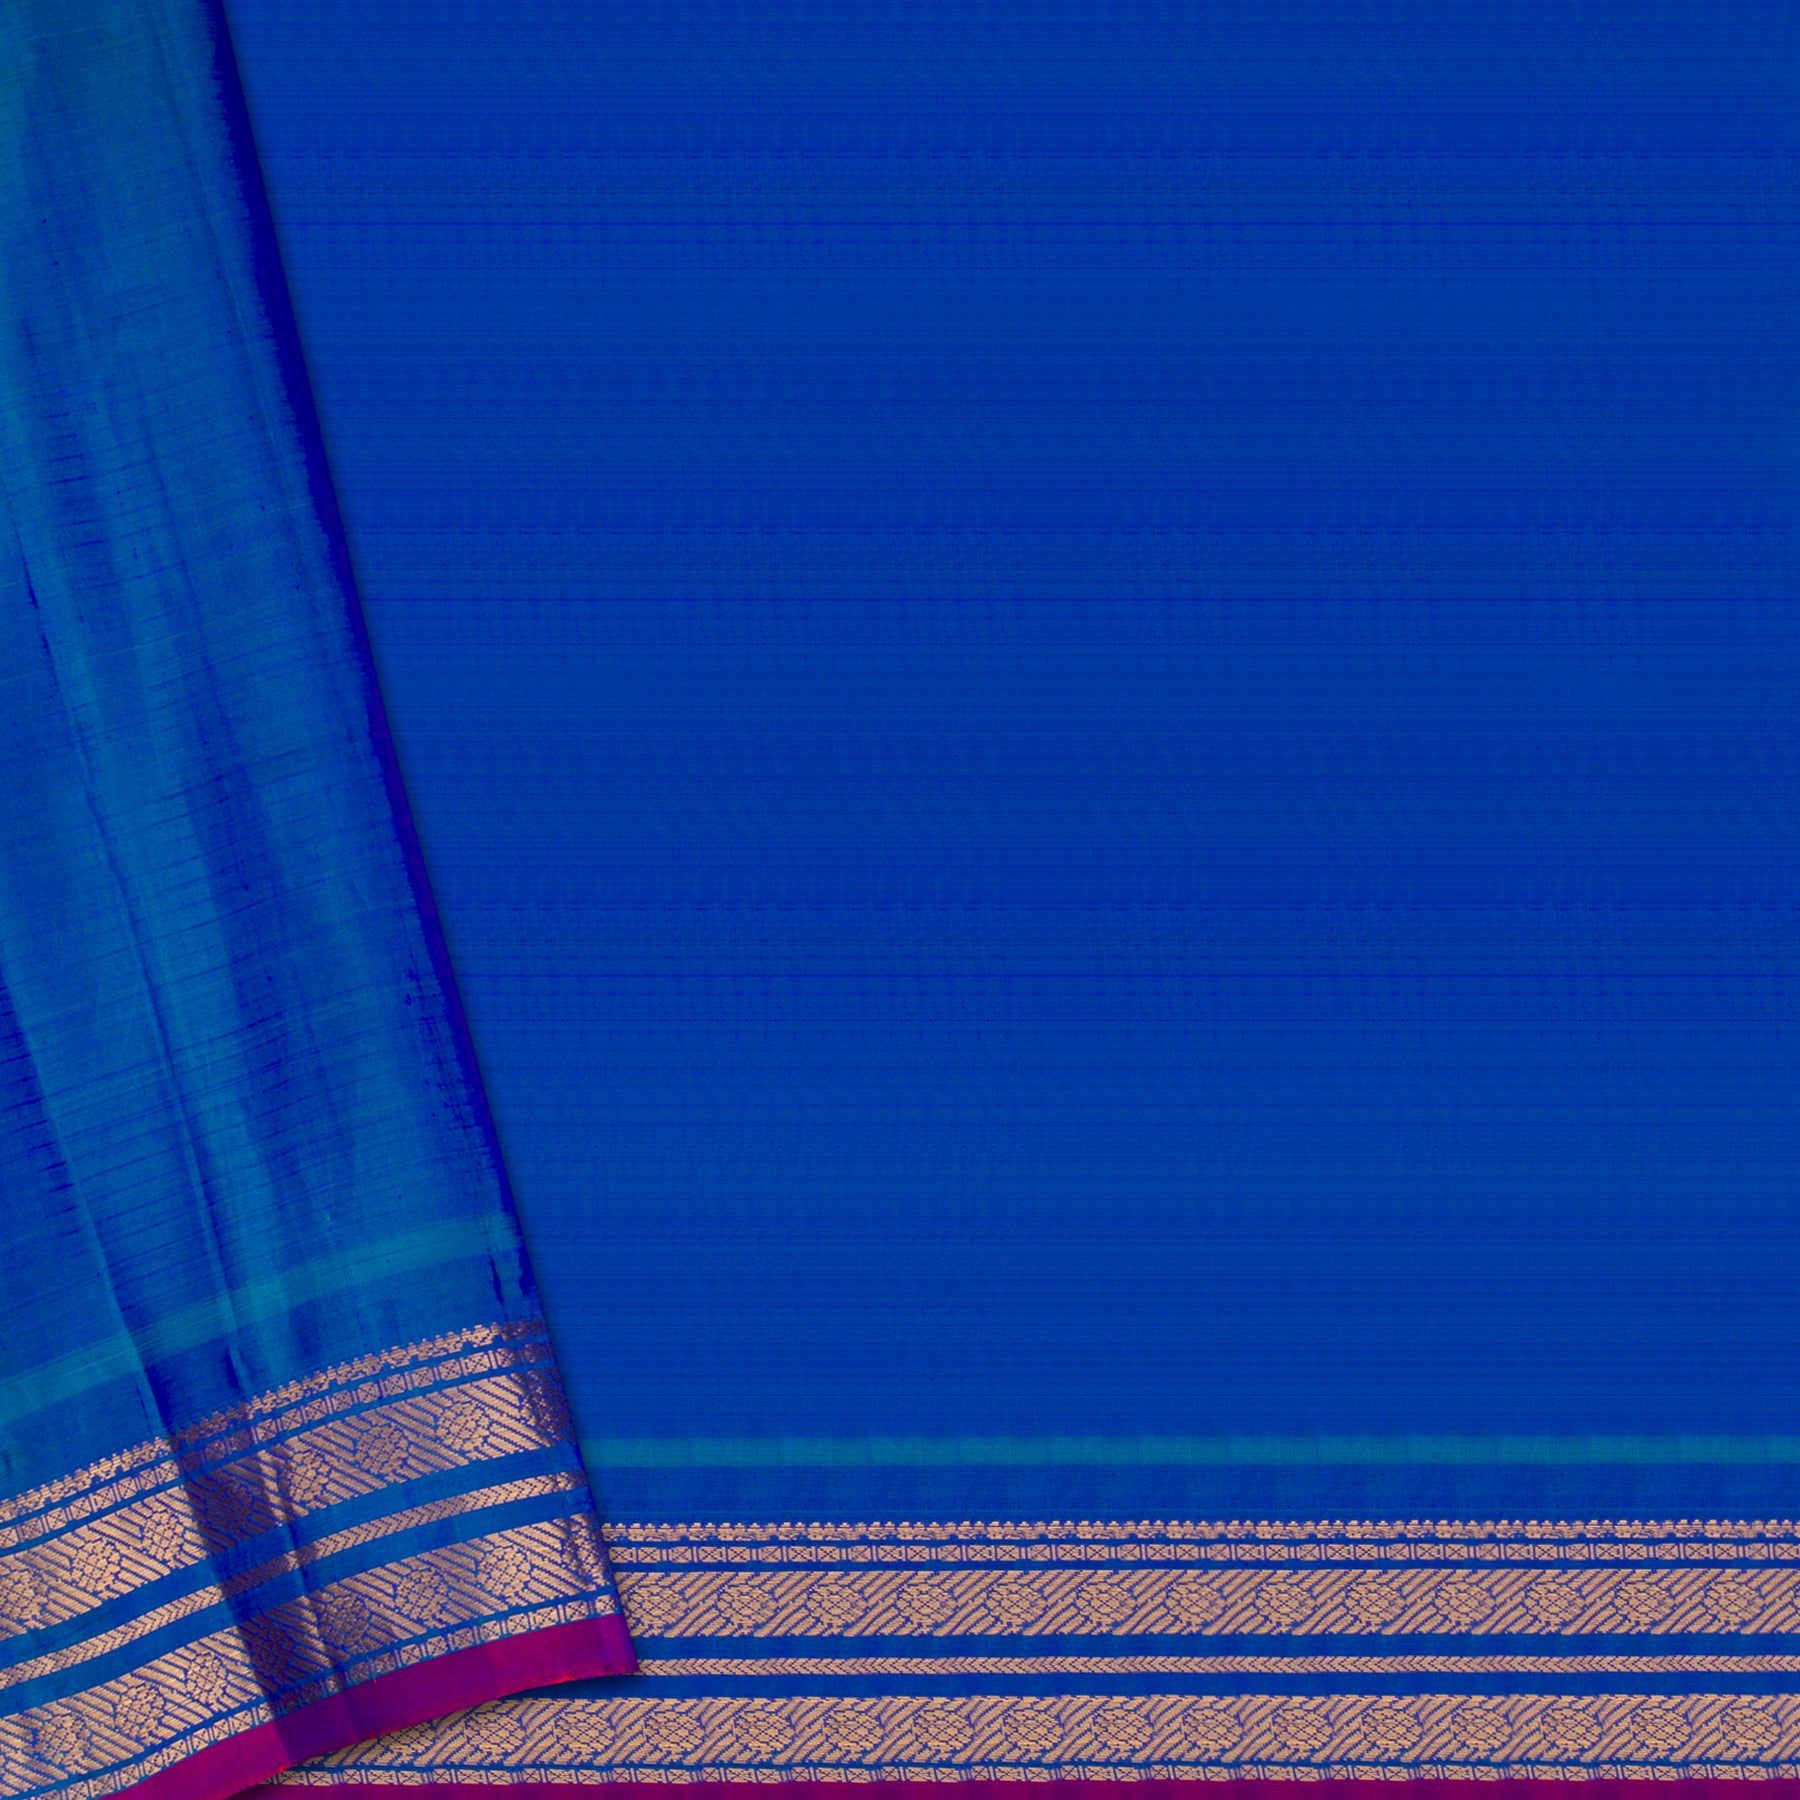 Kanakavalli Gadwal Silk/Cotton Sari 23-604-HS005-07933 - Blouse View